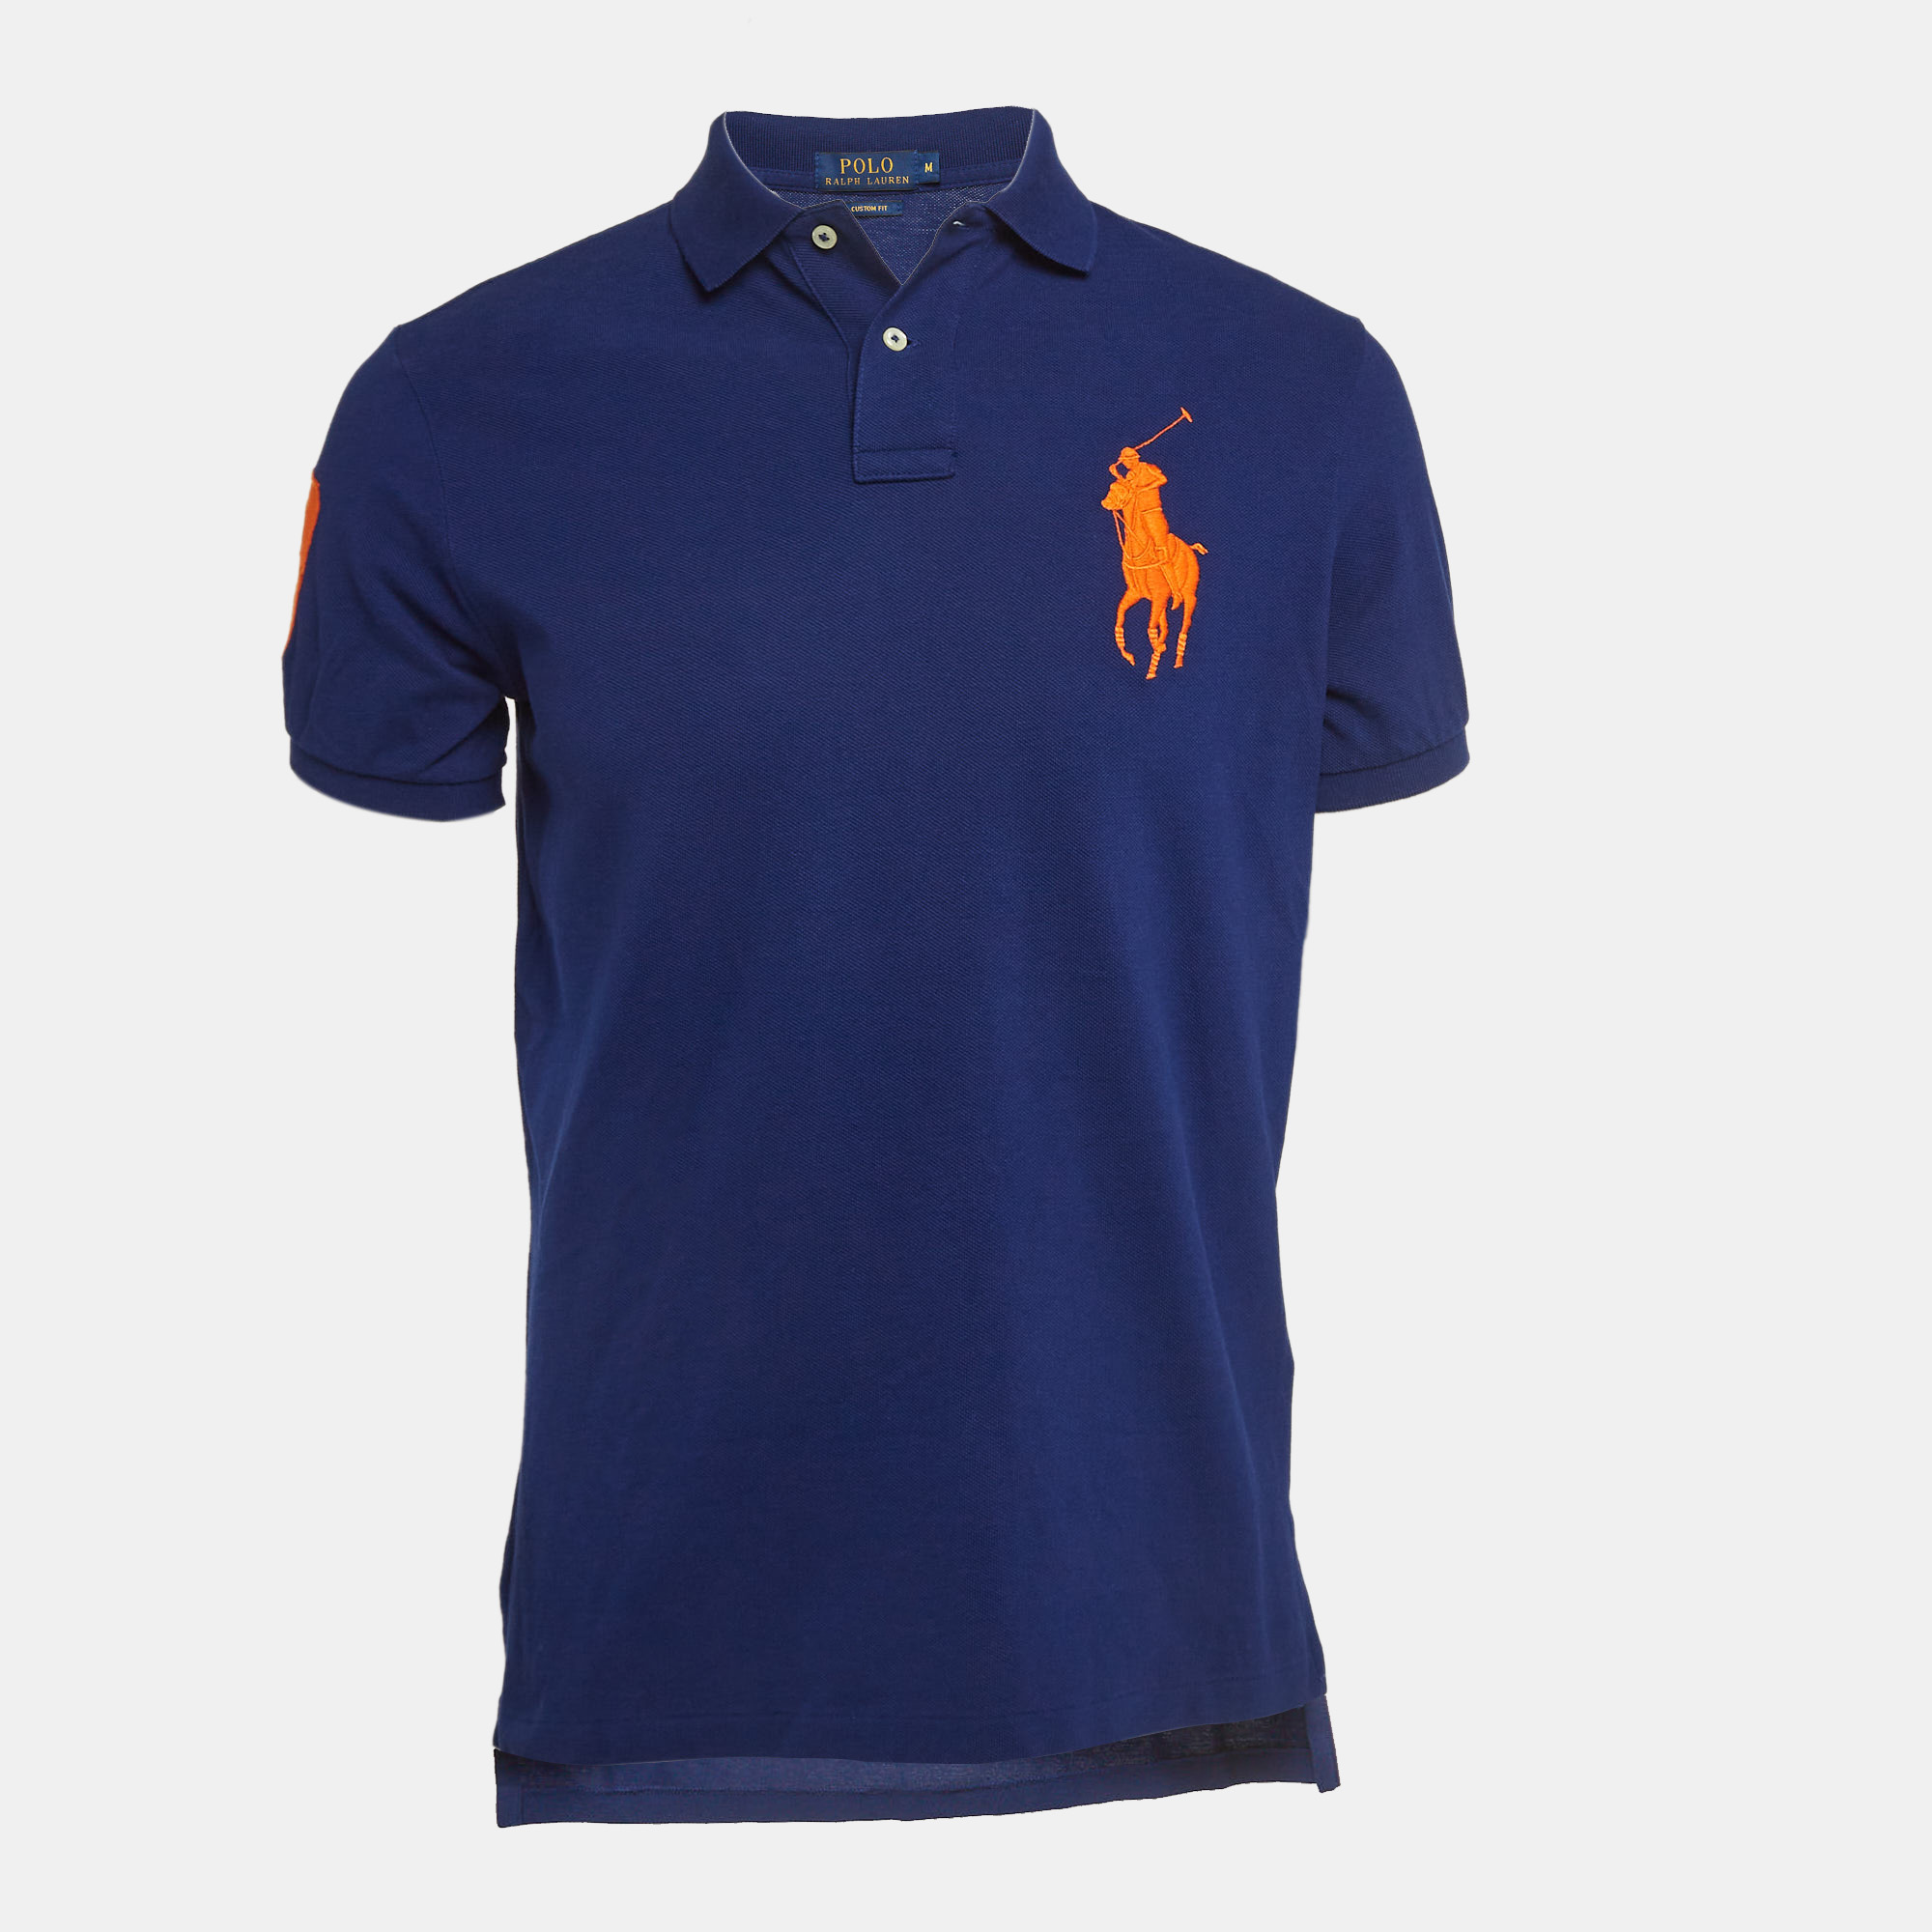 Polo ralph lauren blue logo embroidered cotton pique polo t-shirt m